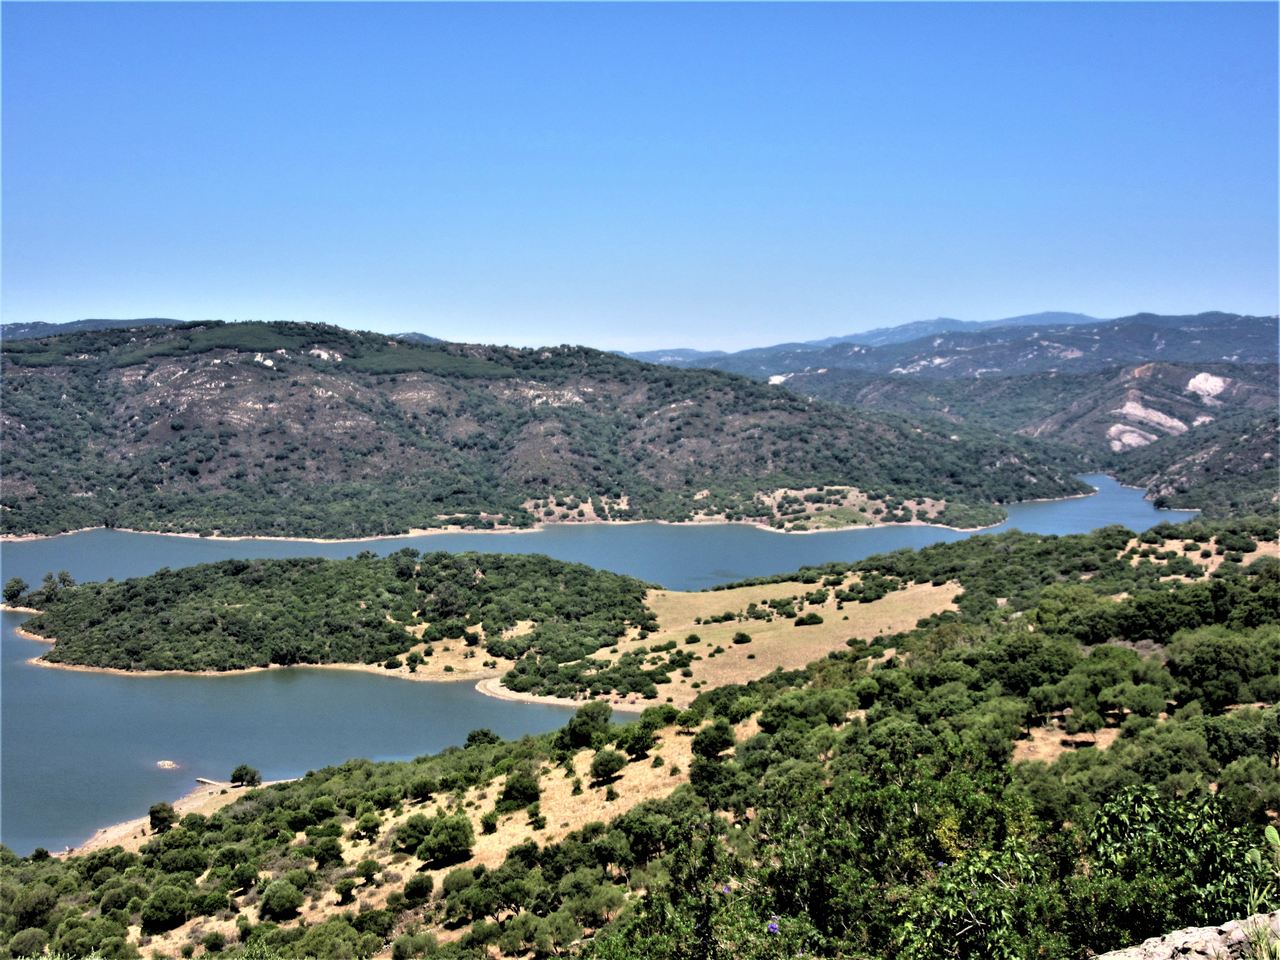 Guadarranque reservoir 